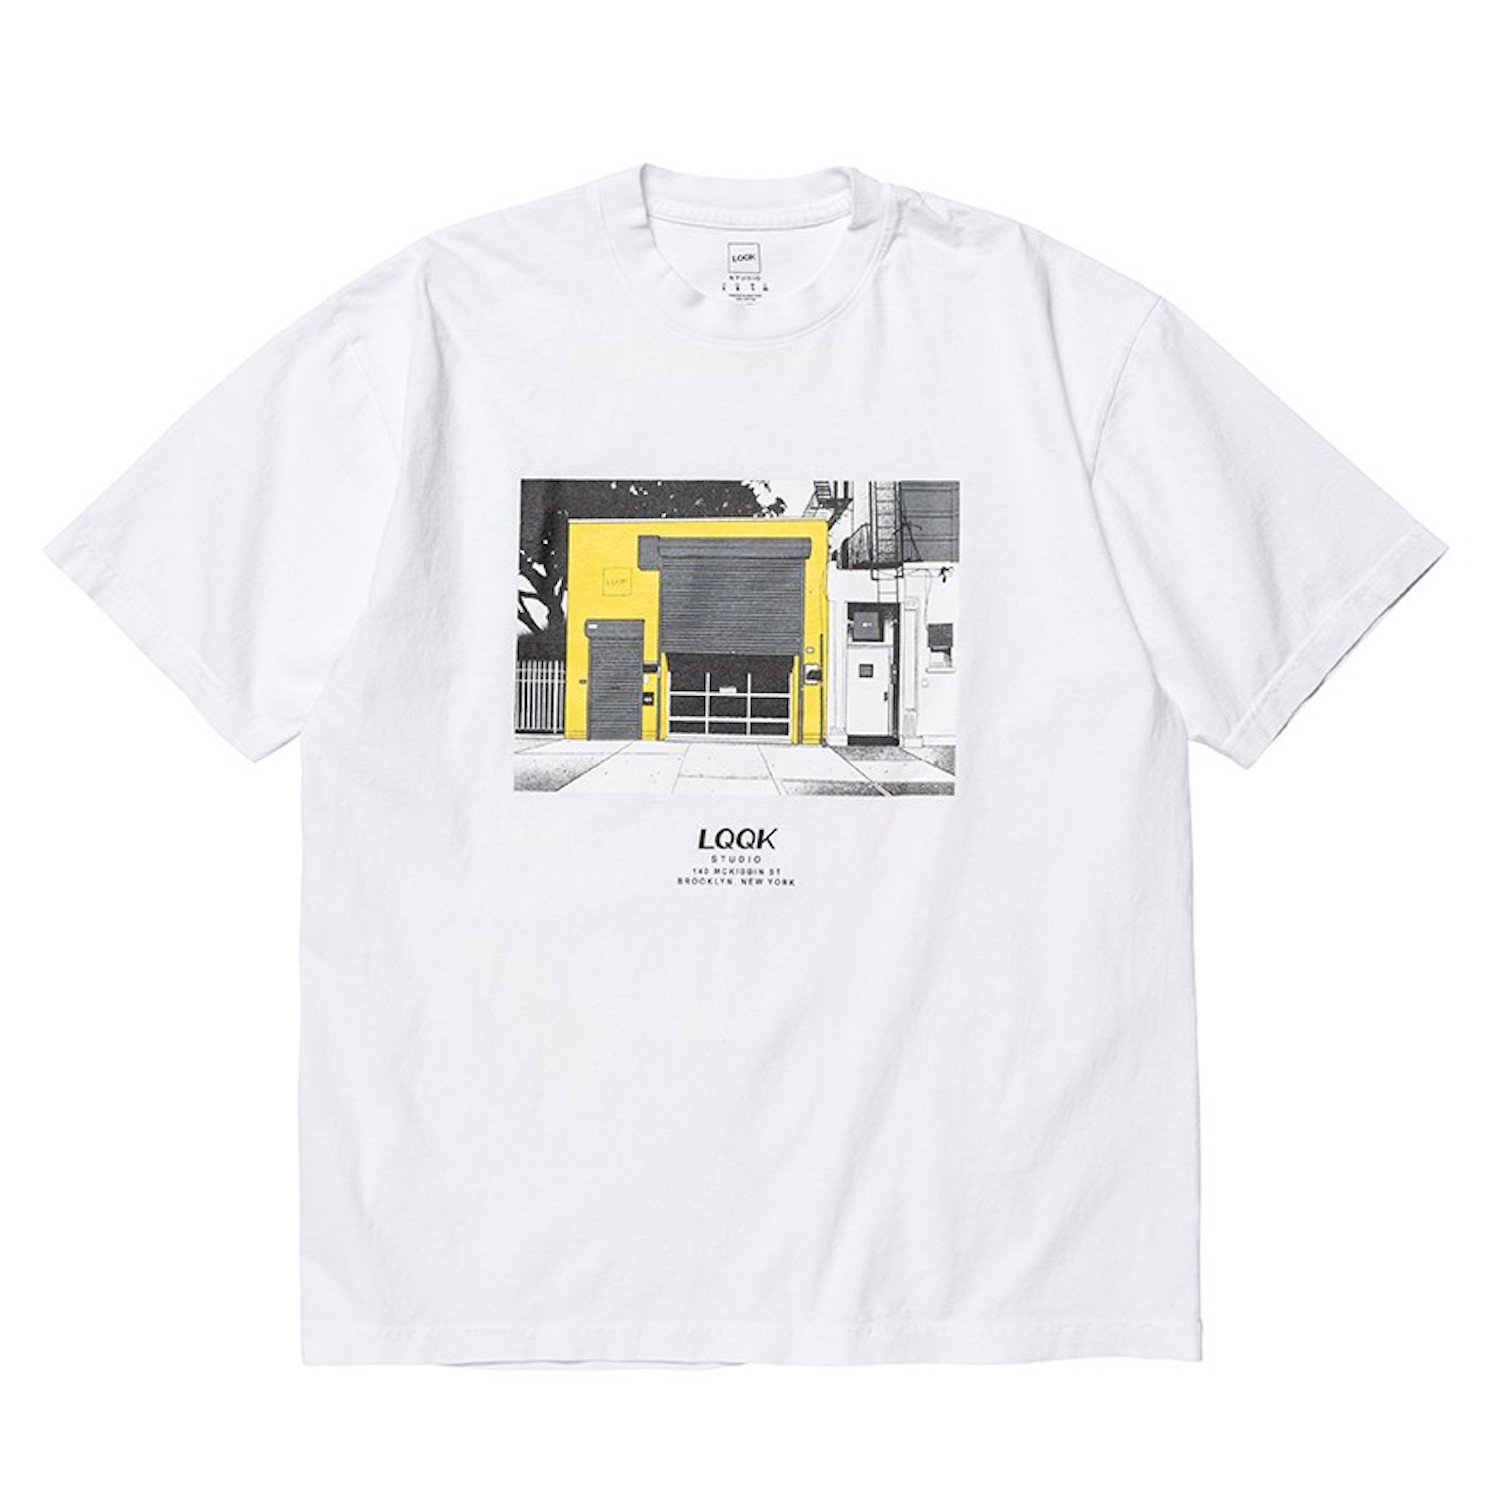 LQQK STUDIO SHOP Tシャツ 白 L 新品 送料込 - スケートボード